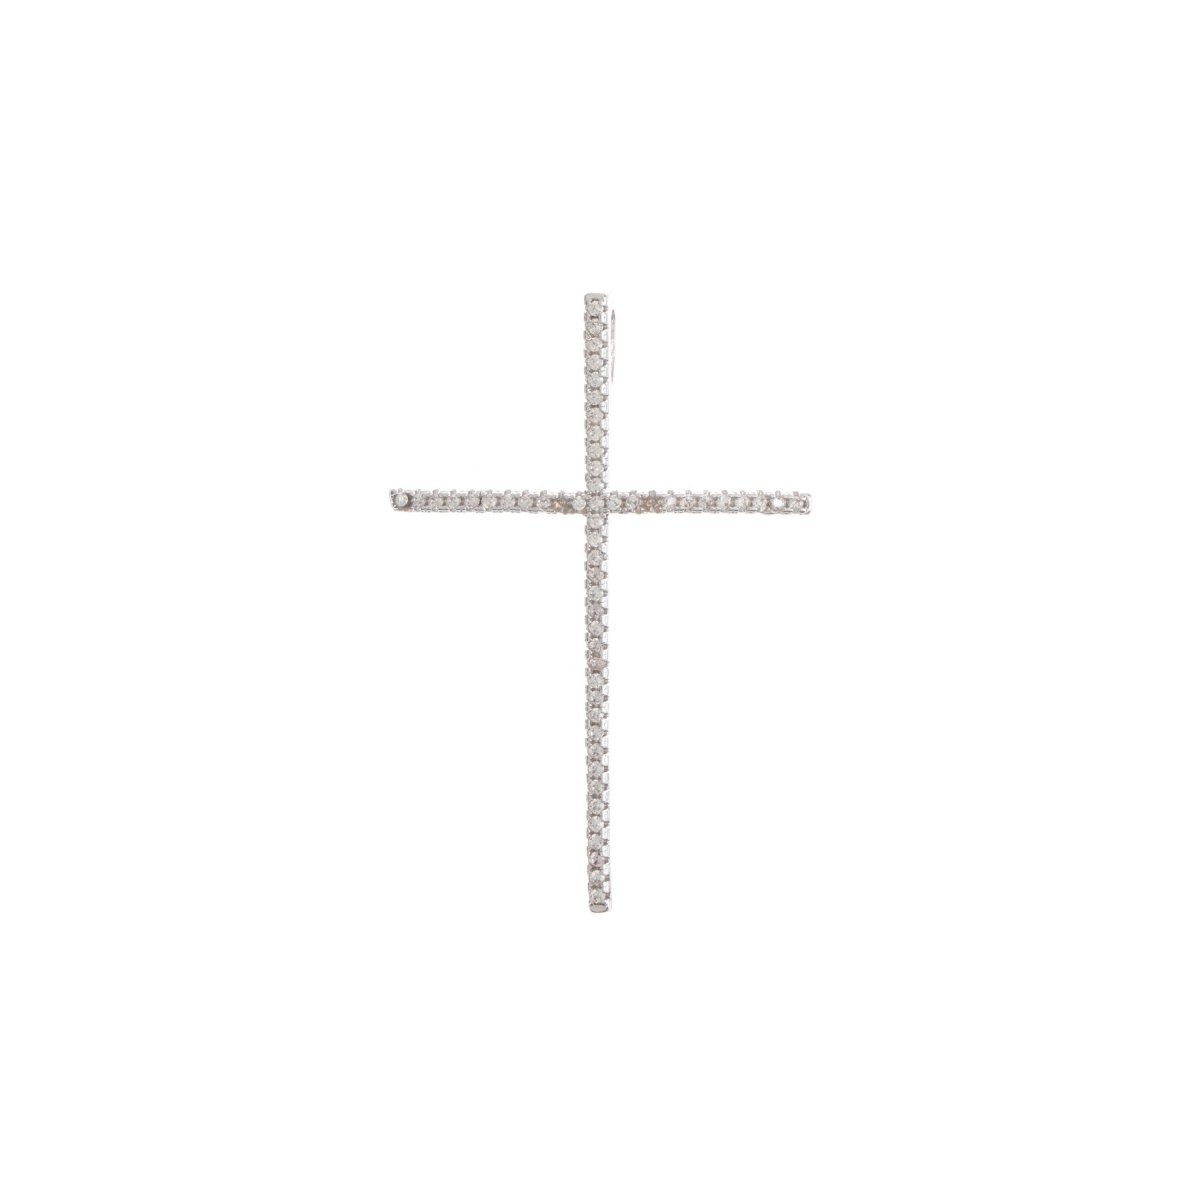 Gold Filled / Rose Gold / Silver / Black Cross CZ Charm Pendant, Micro Pave CZ Cross Charms Cubic Zirconia Cross Pendants Cross Necklace Jewelry, C-227 - DLUXCA